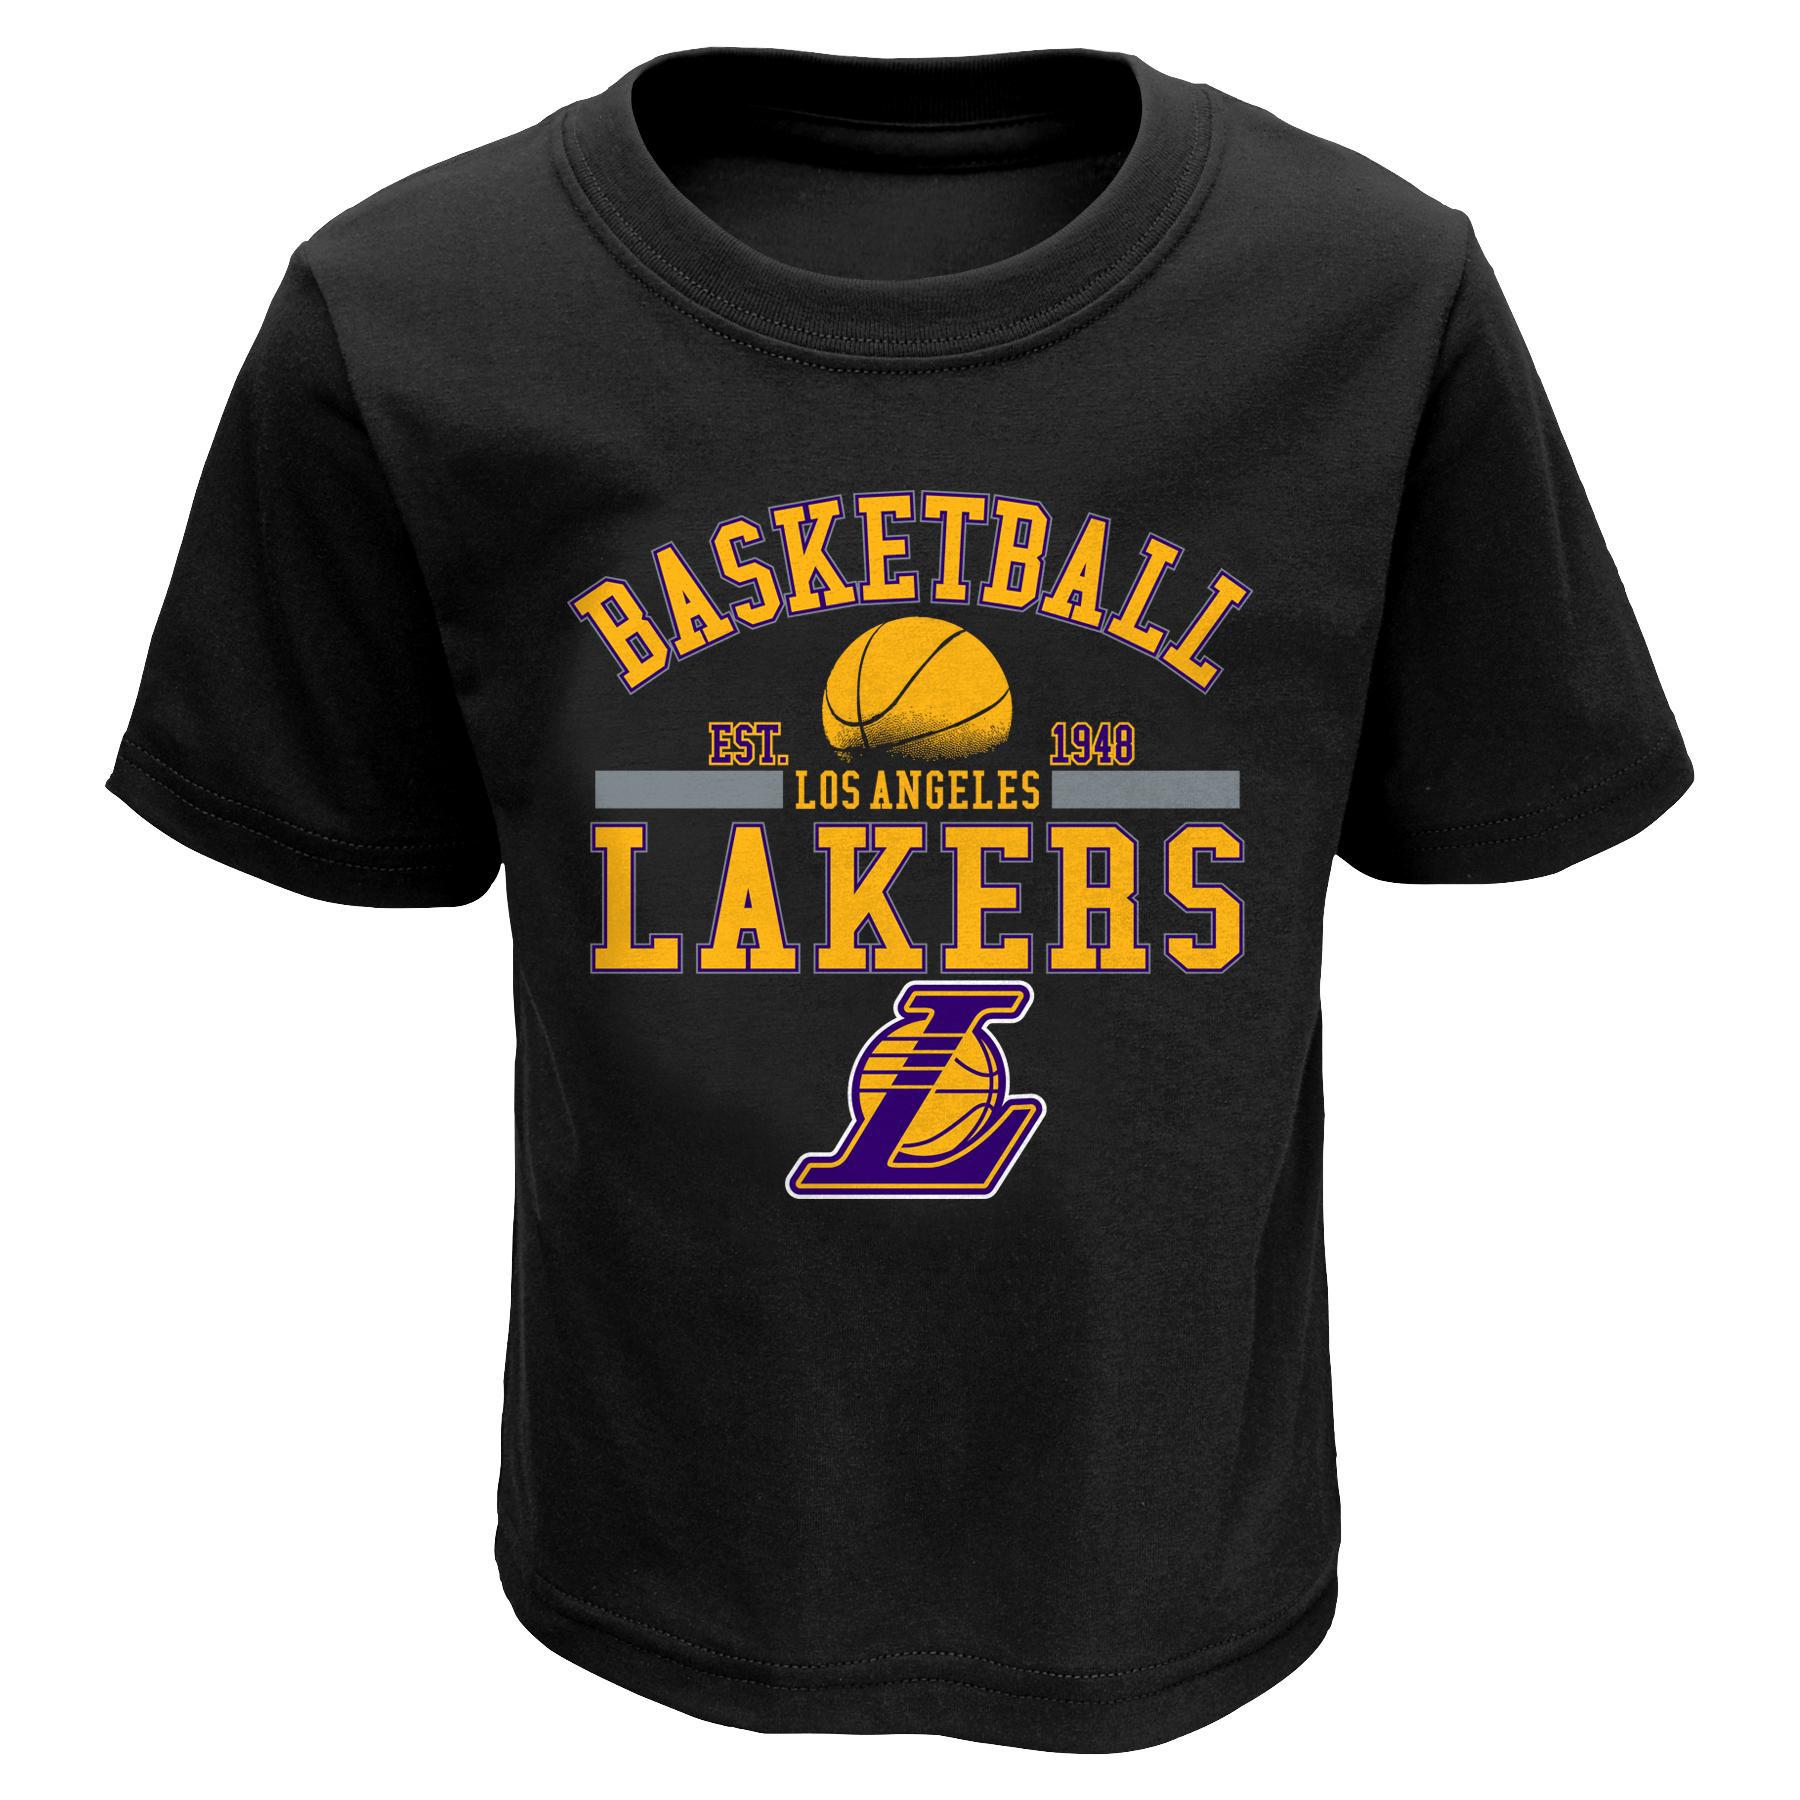 NBA Boys' Graphic T-Shirt - Los Angeles Lakers